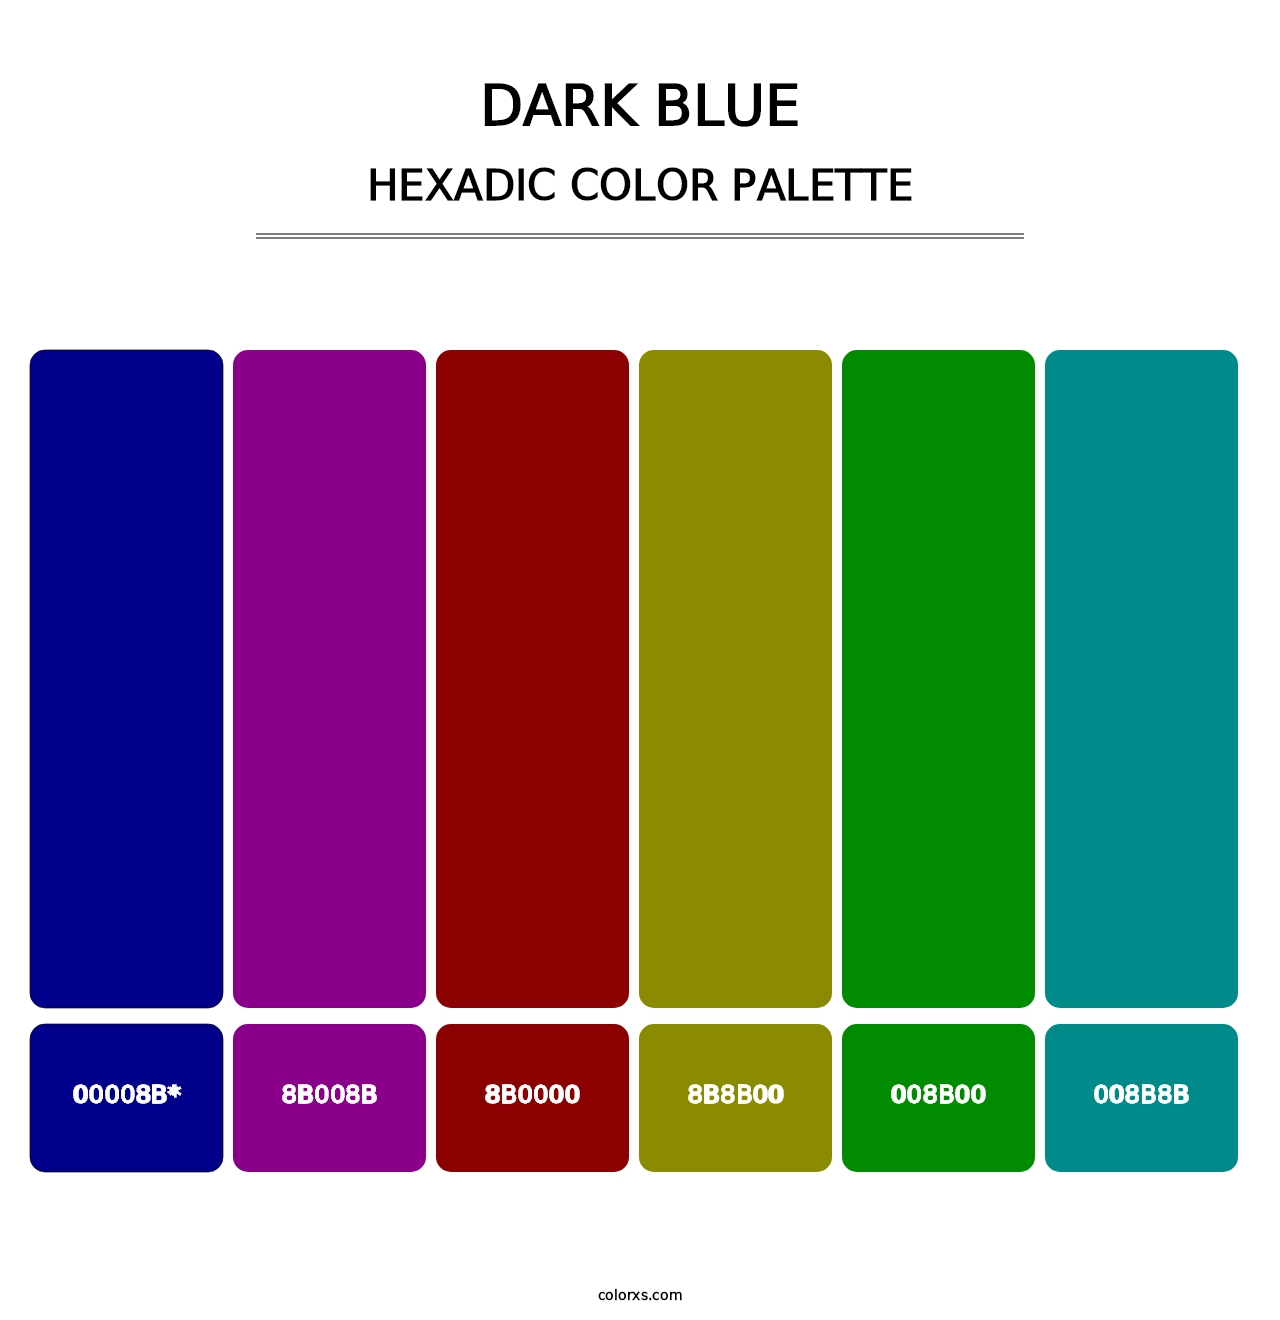 Dark Blue - Hexadic Color Palette